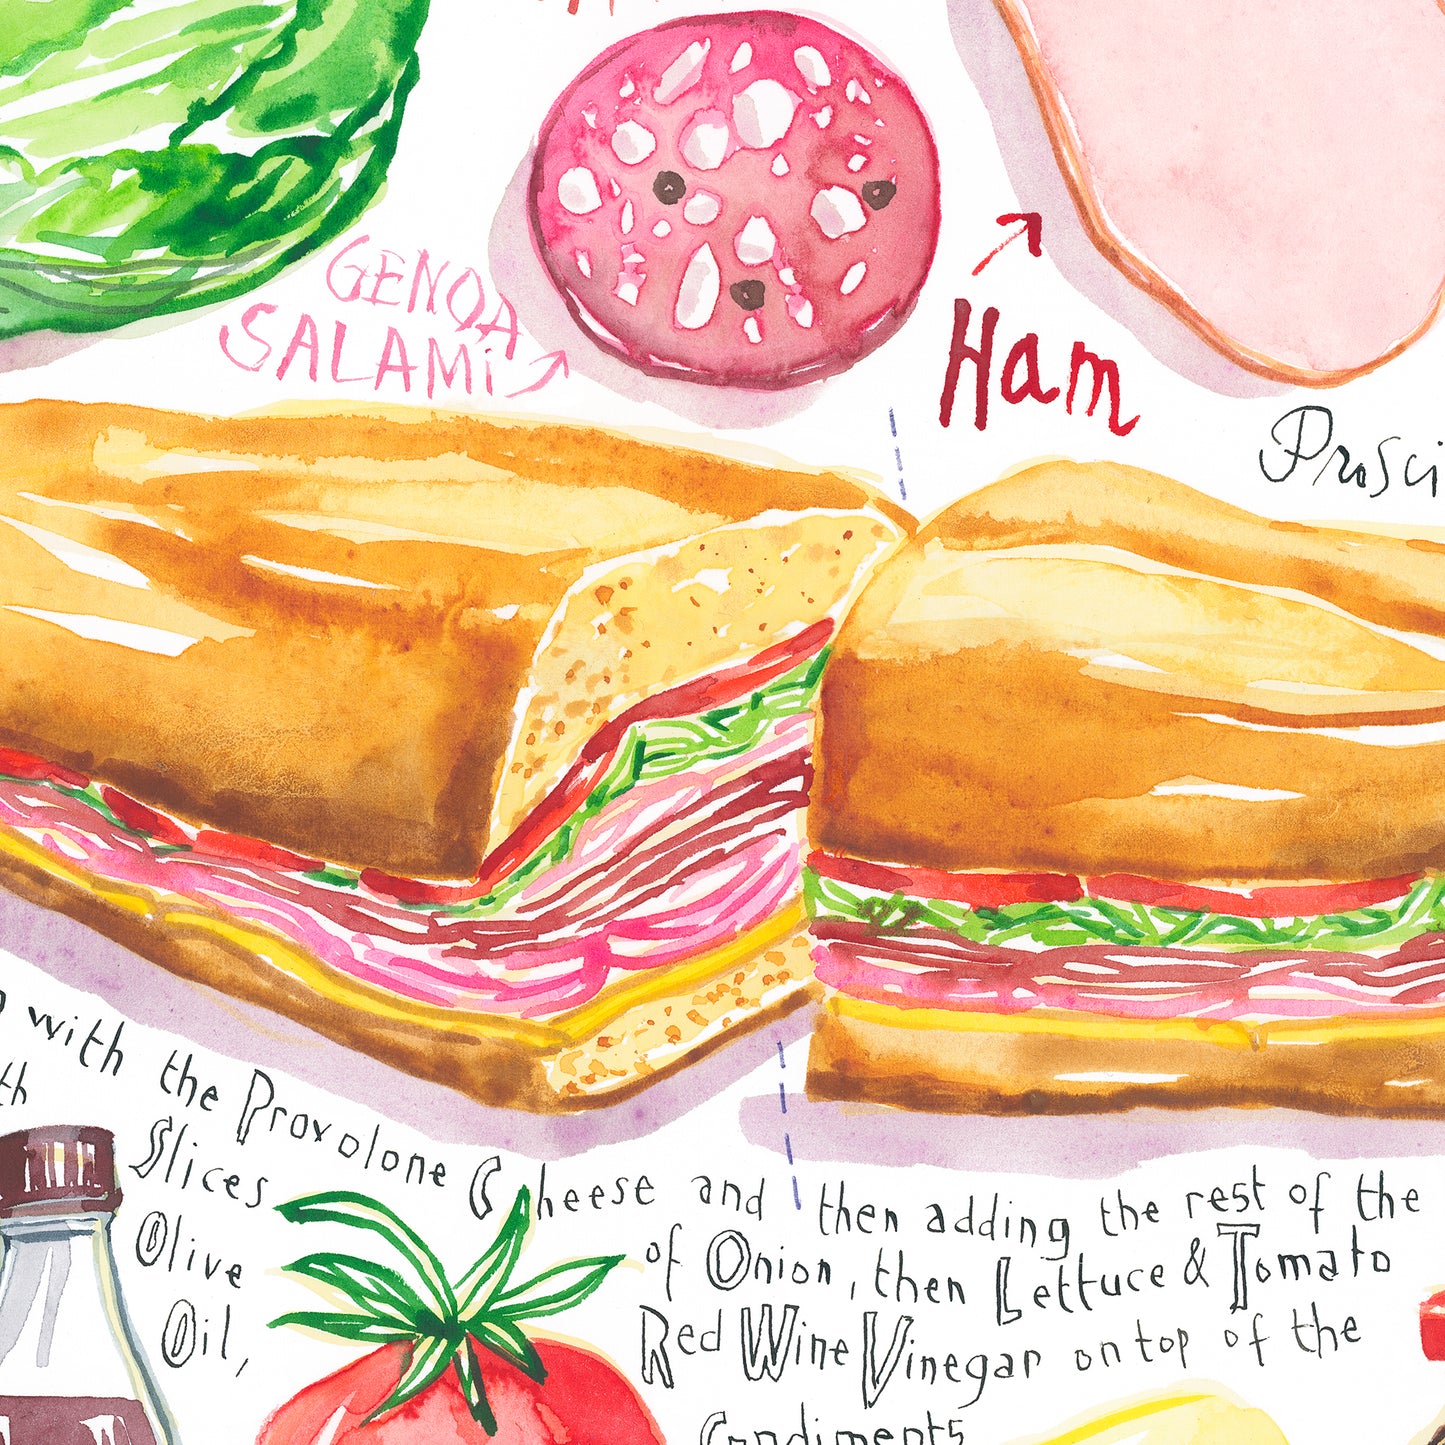 Italian Sandwich recipe - Hoagie - Sub - Hero